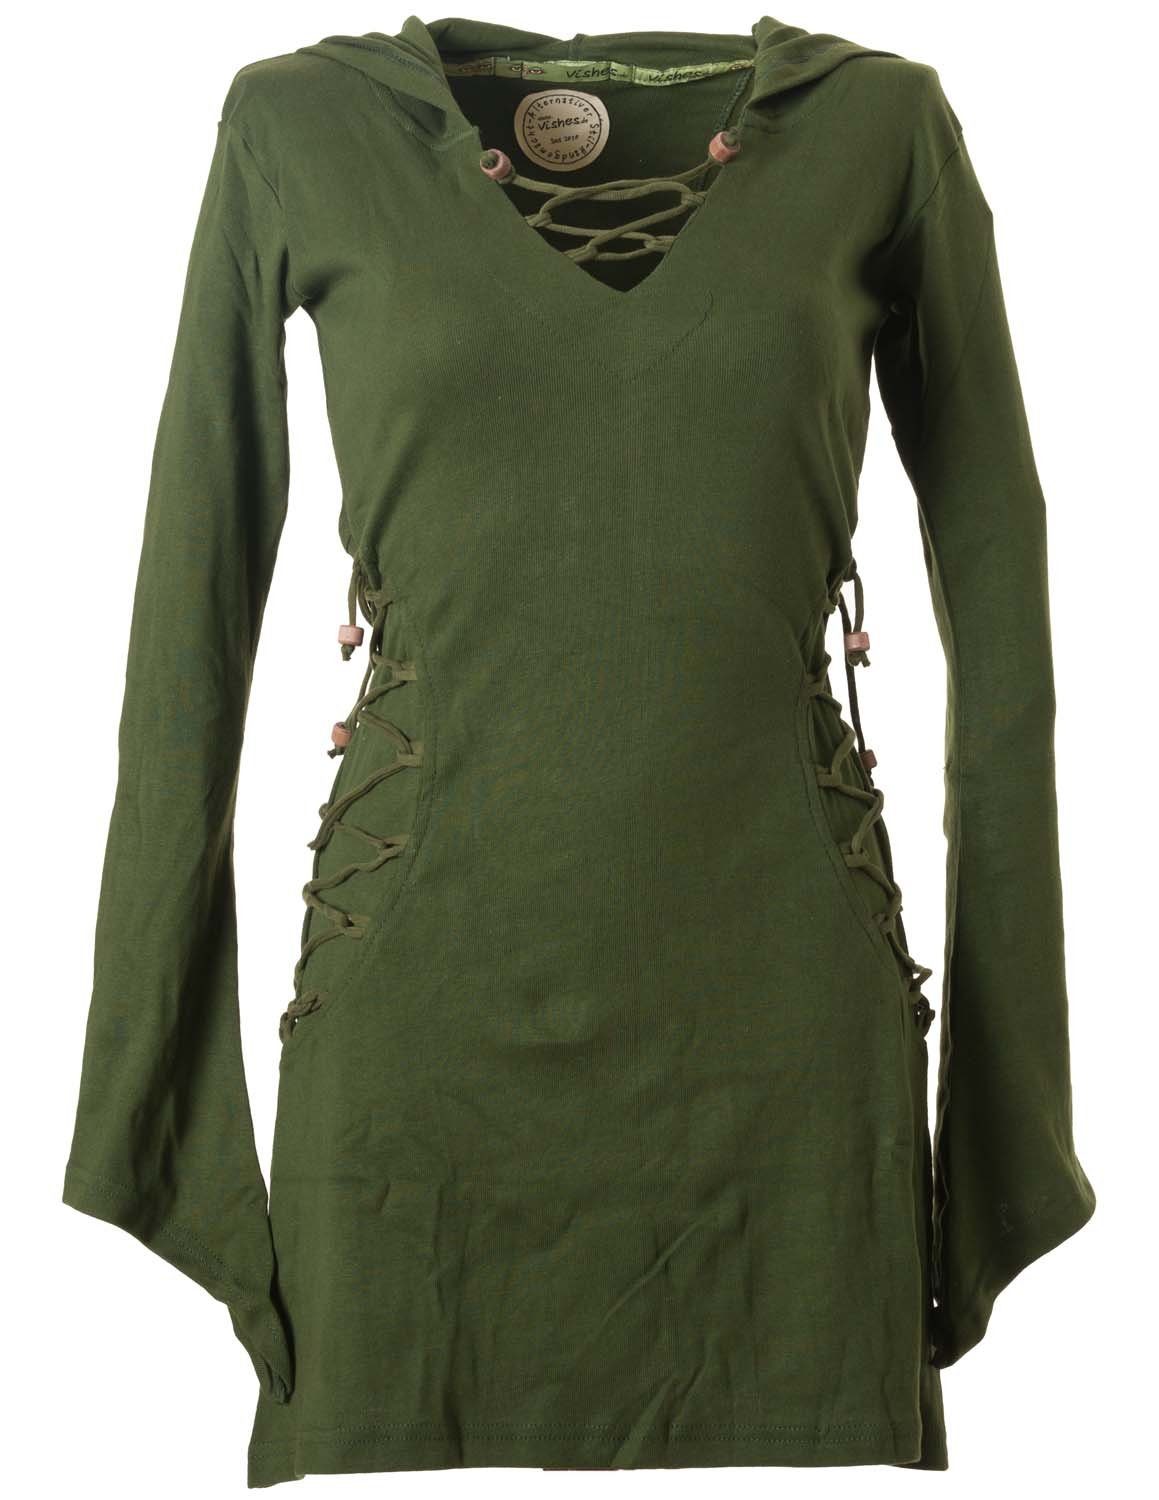 Vishes Zipfelkleid Elfenkleid mit Zipfelkapuze Bändern zum Schnüren Ethno, Hoody, Gothik Style olive | Kleider